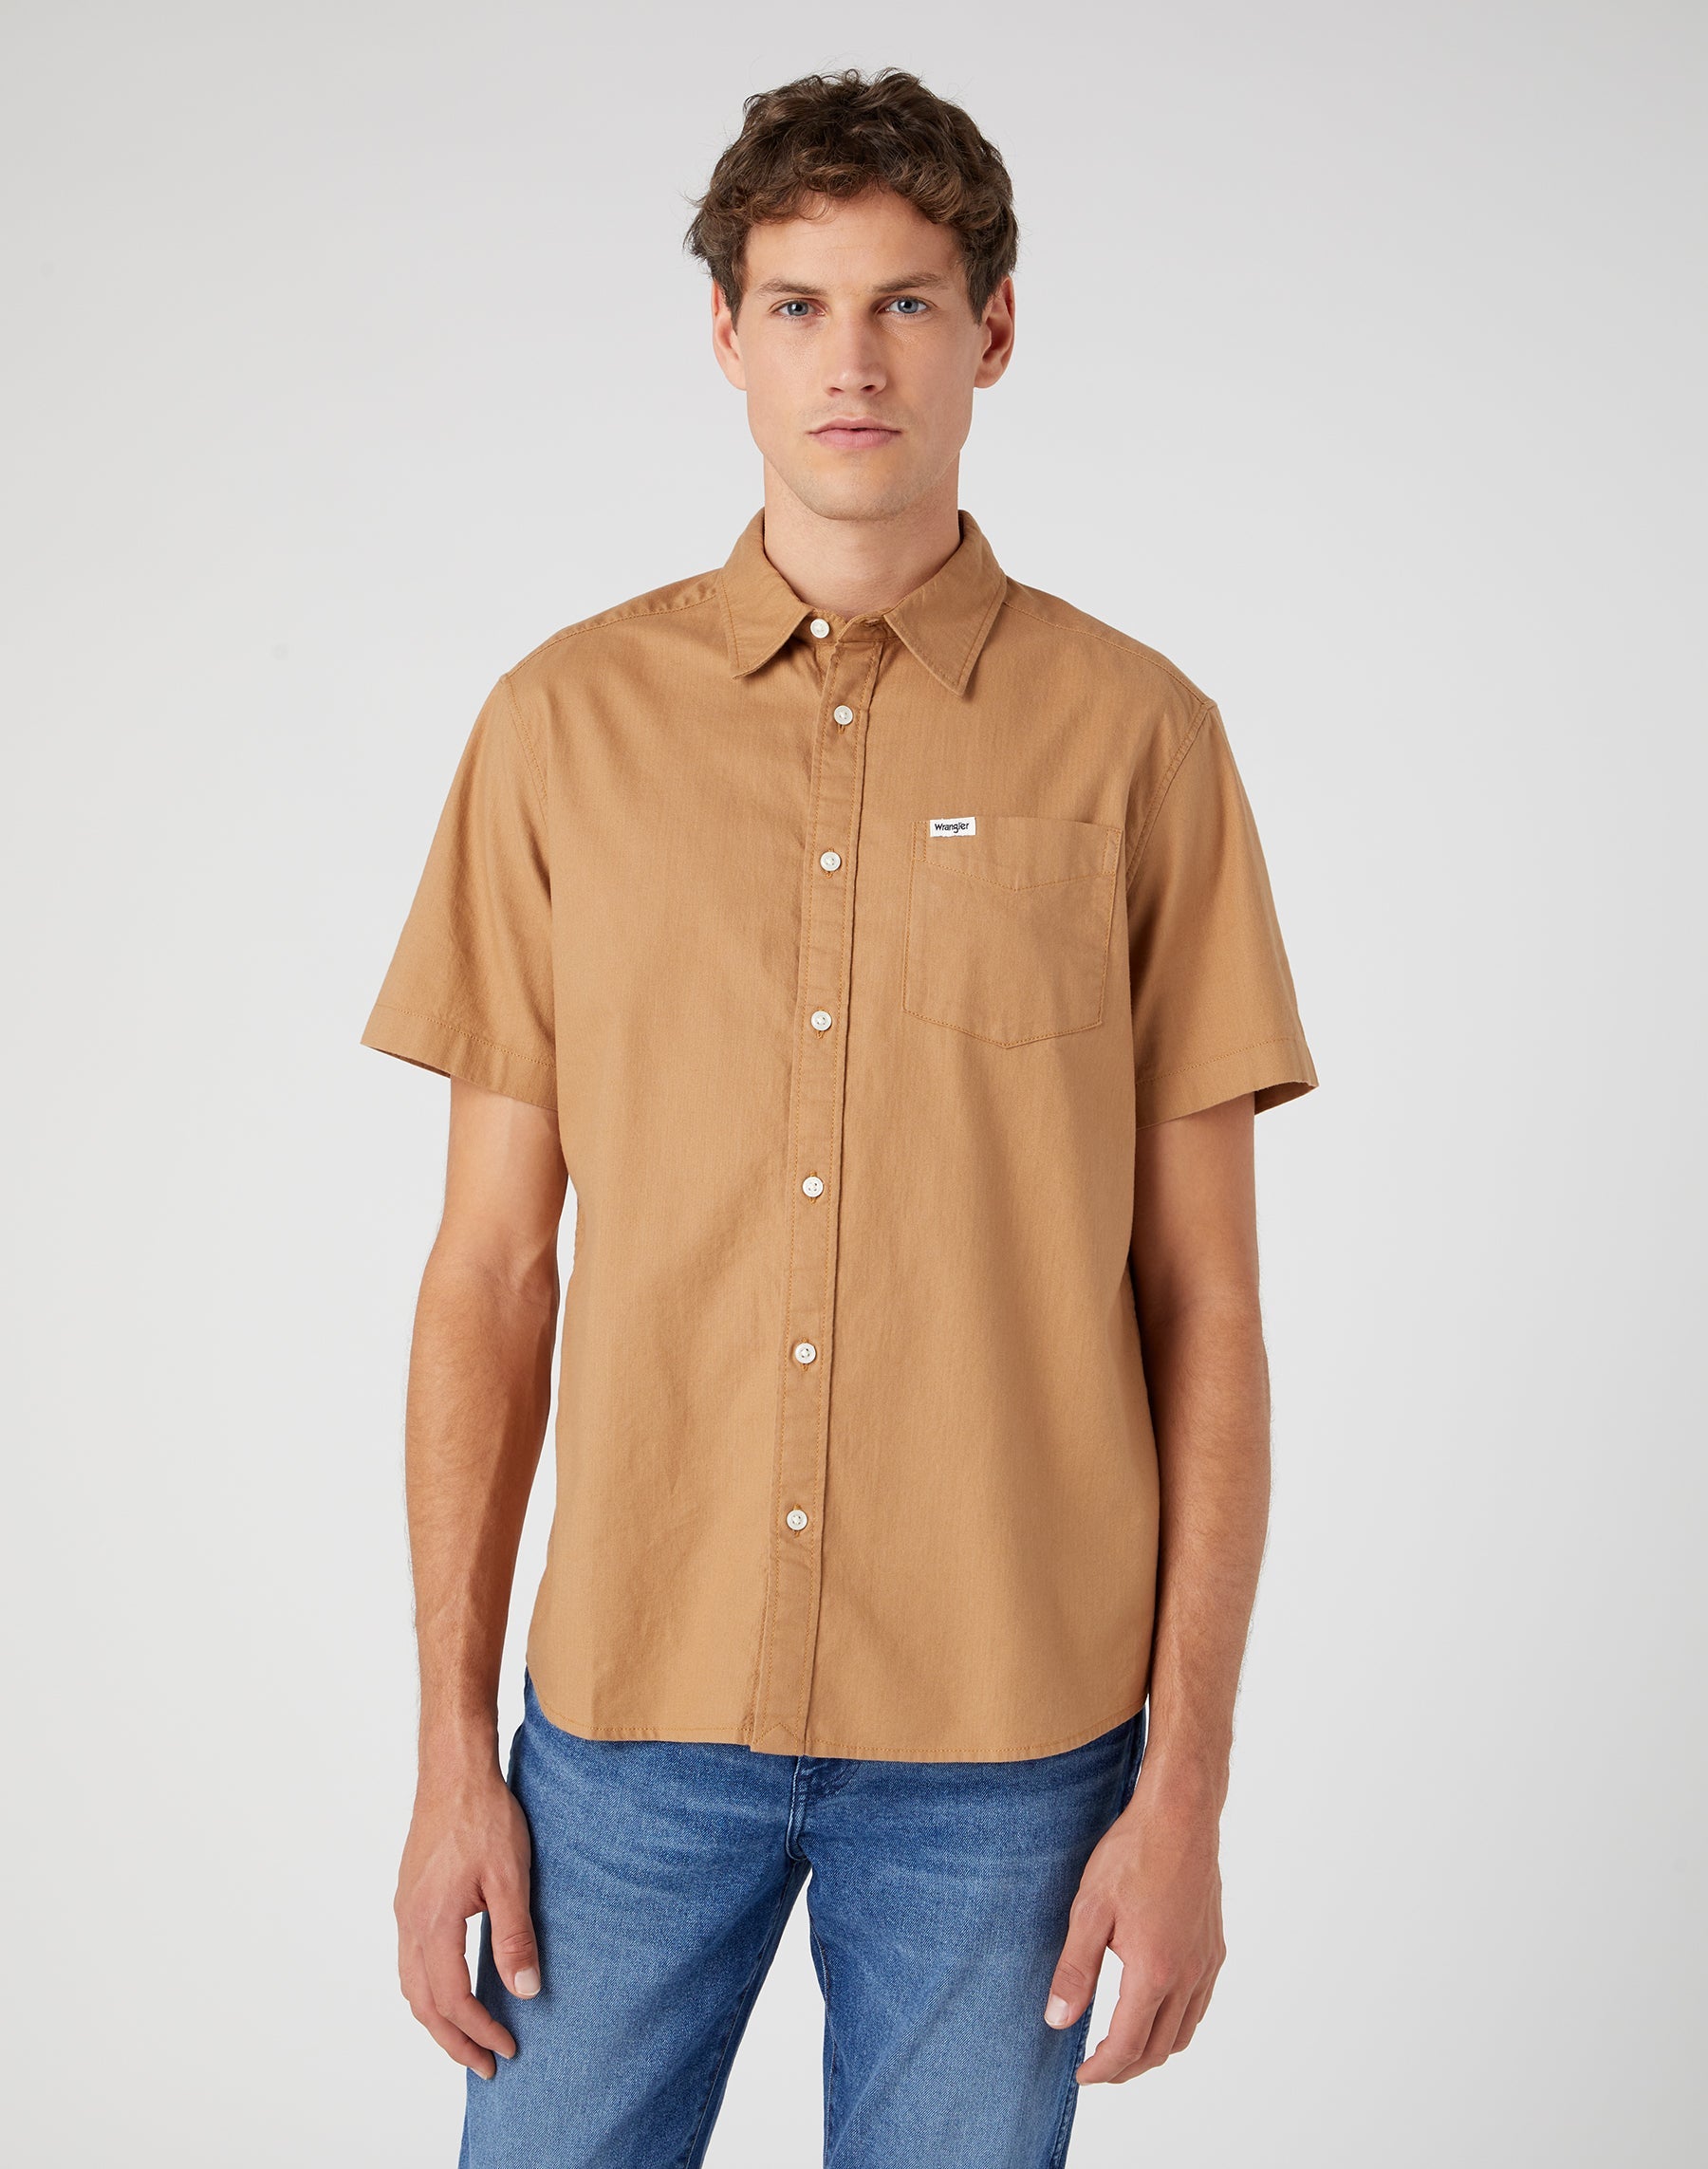 Kurzarm One Pocket Shirt in Tobacco Brown Hemden Wrangler   